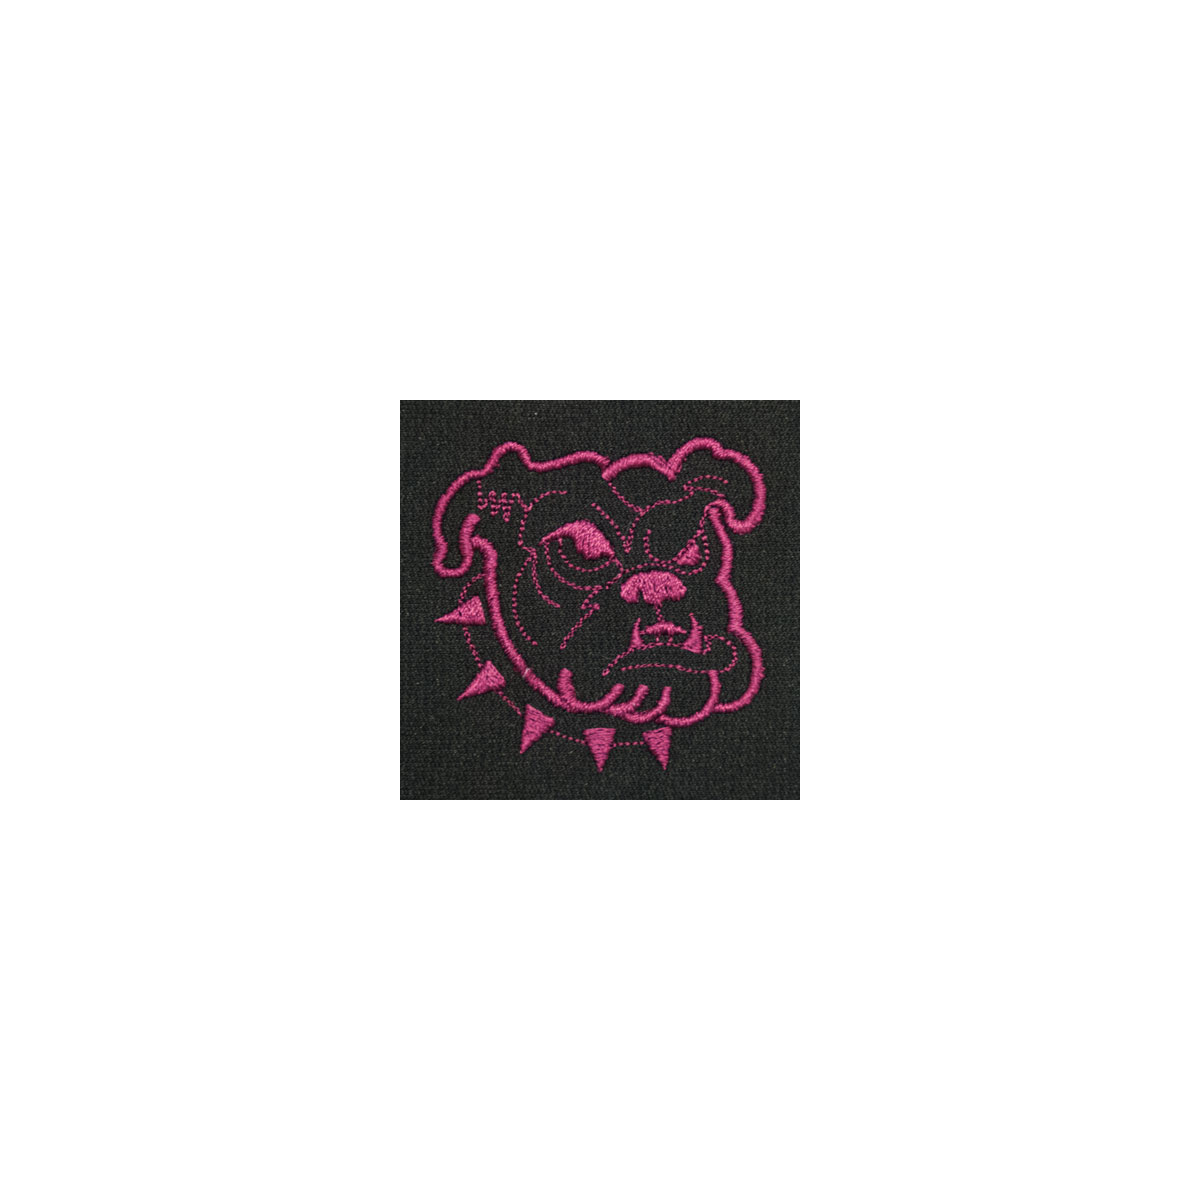 Bulldog Monogram Mascot (MM126)